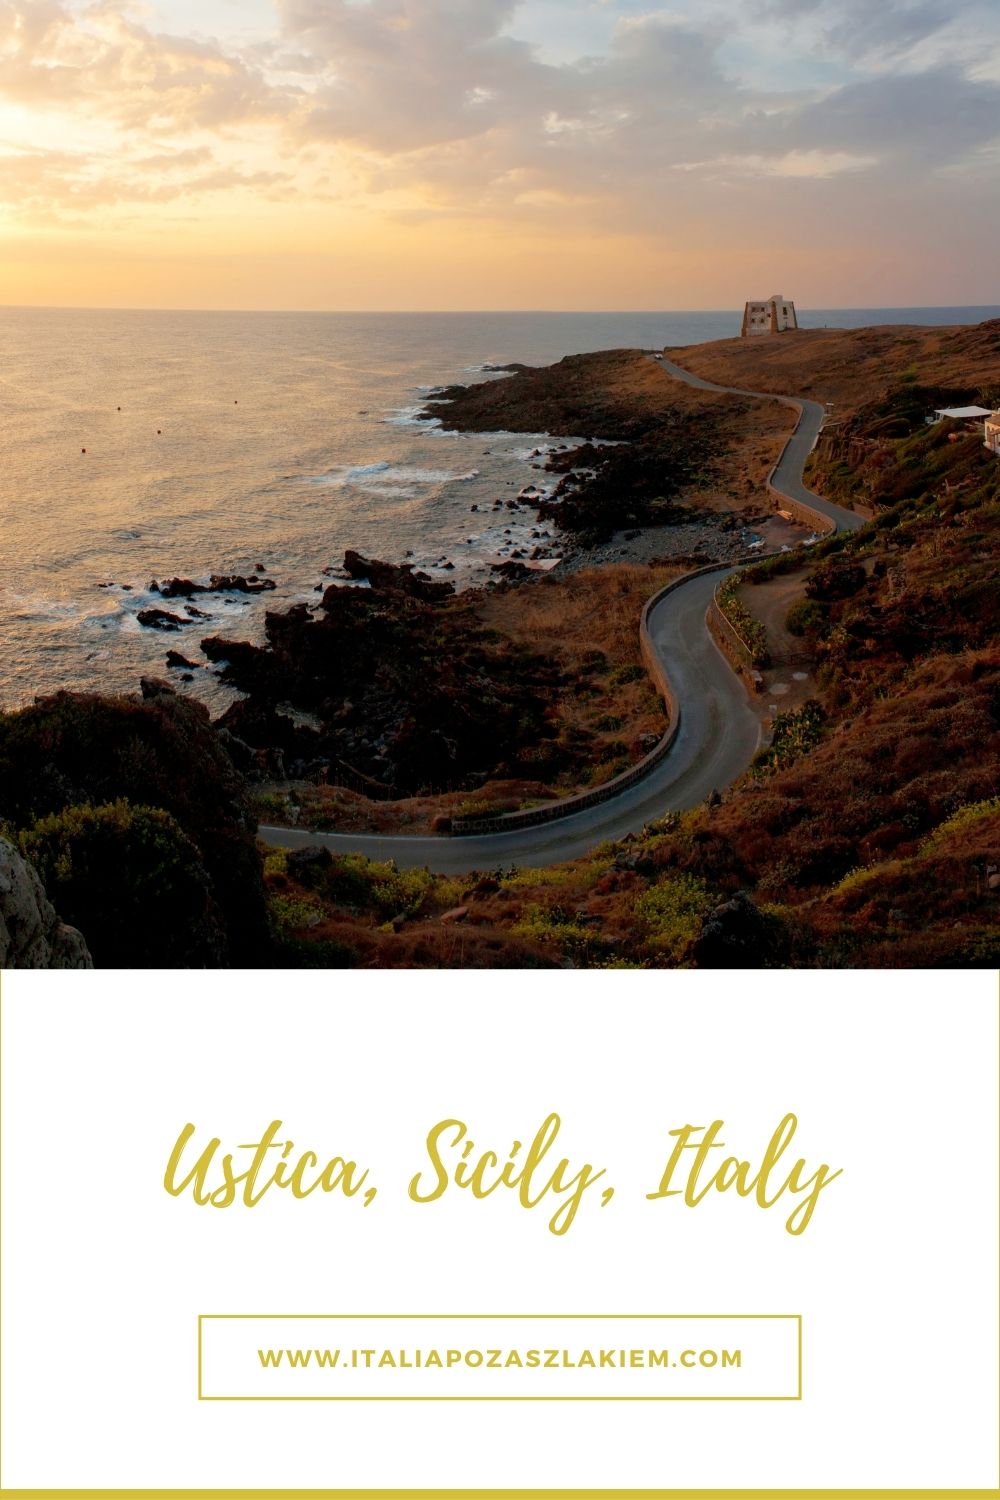 Ustica, Sicily, Italy